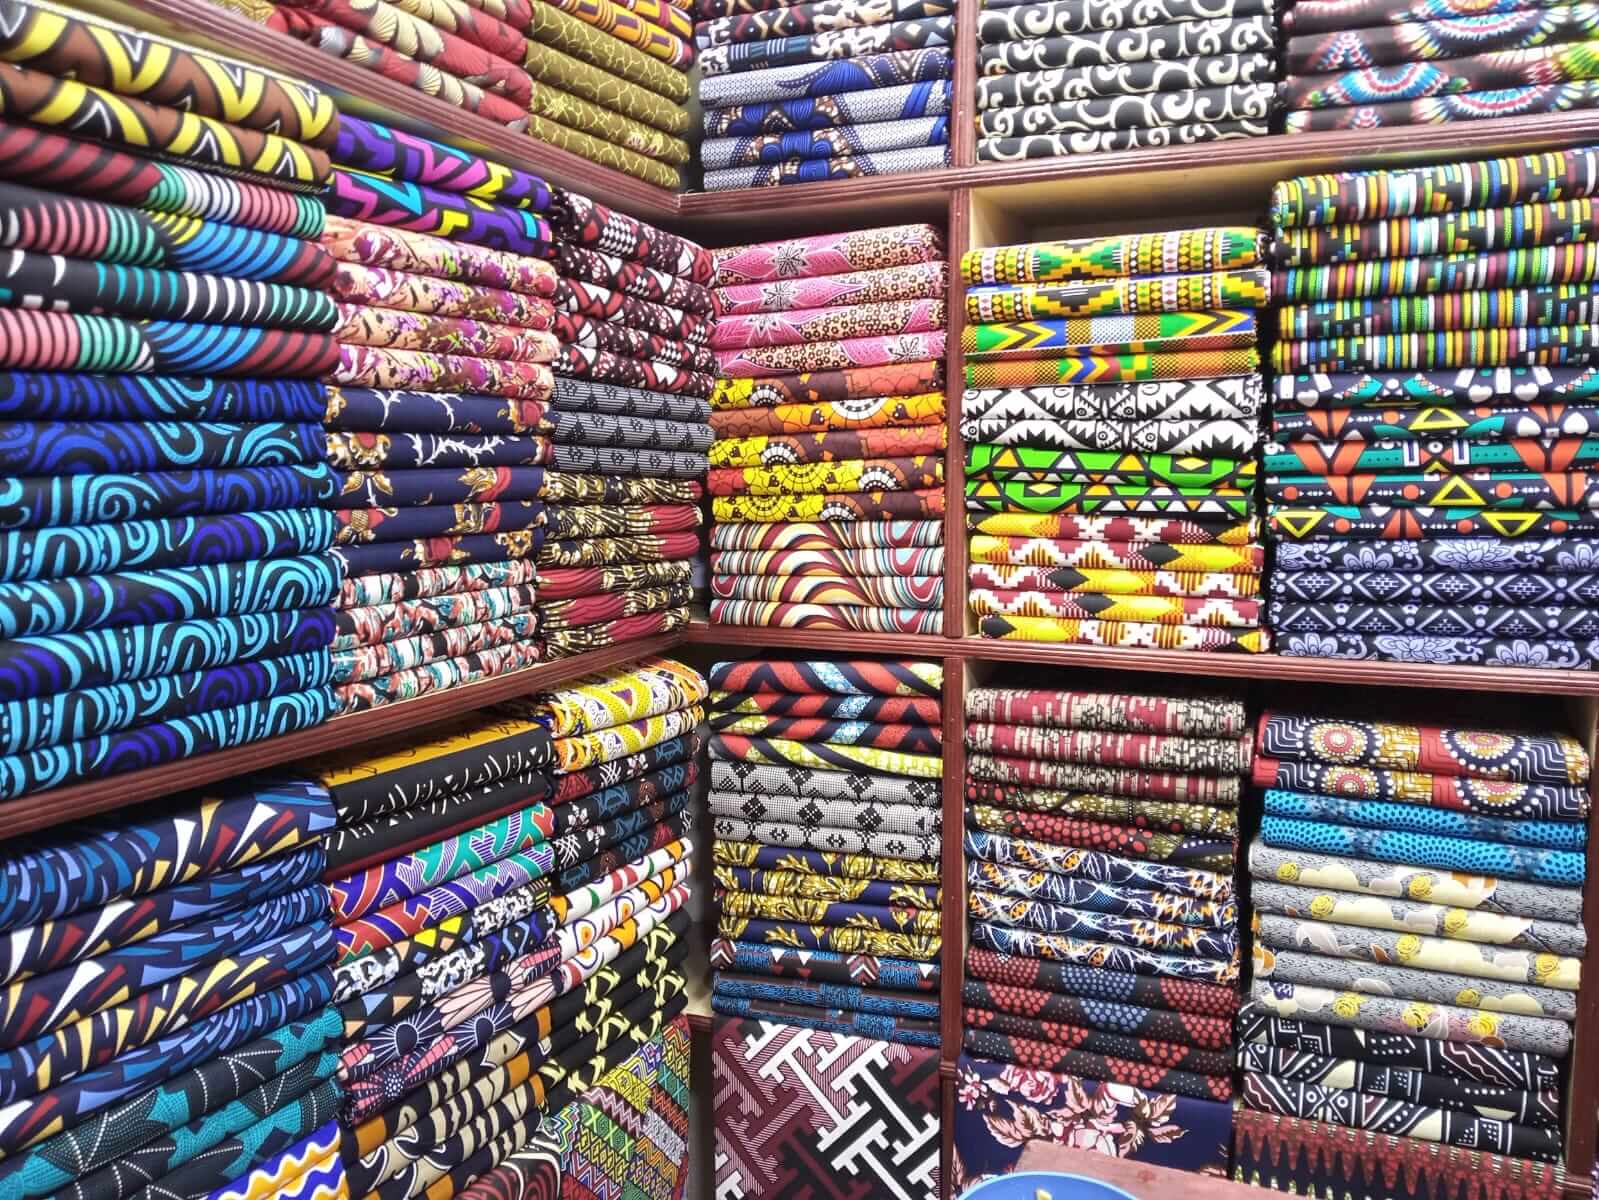 Market photo of stacks of fabric